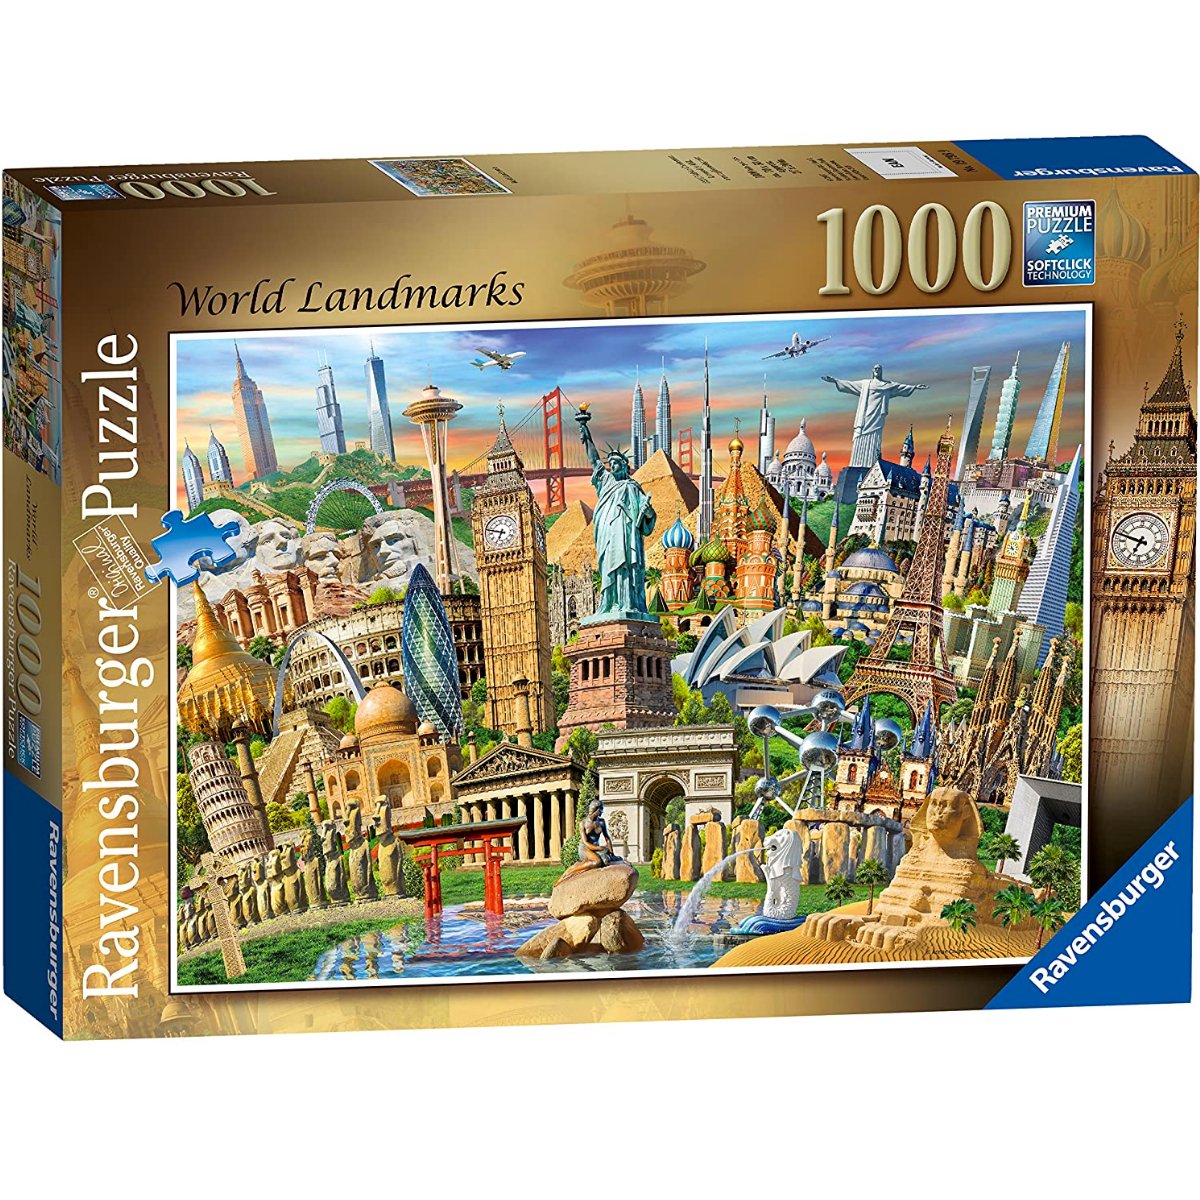 Ravensburger World Landmarks Jigsaw Puzzle (1000 Piece) - Phillips Hobbies